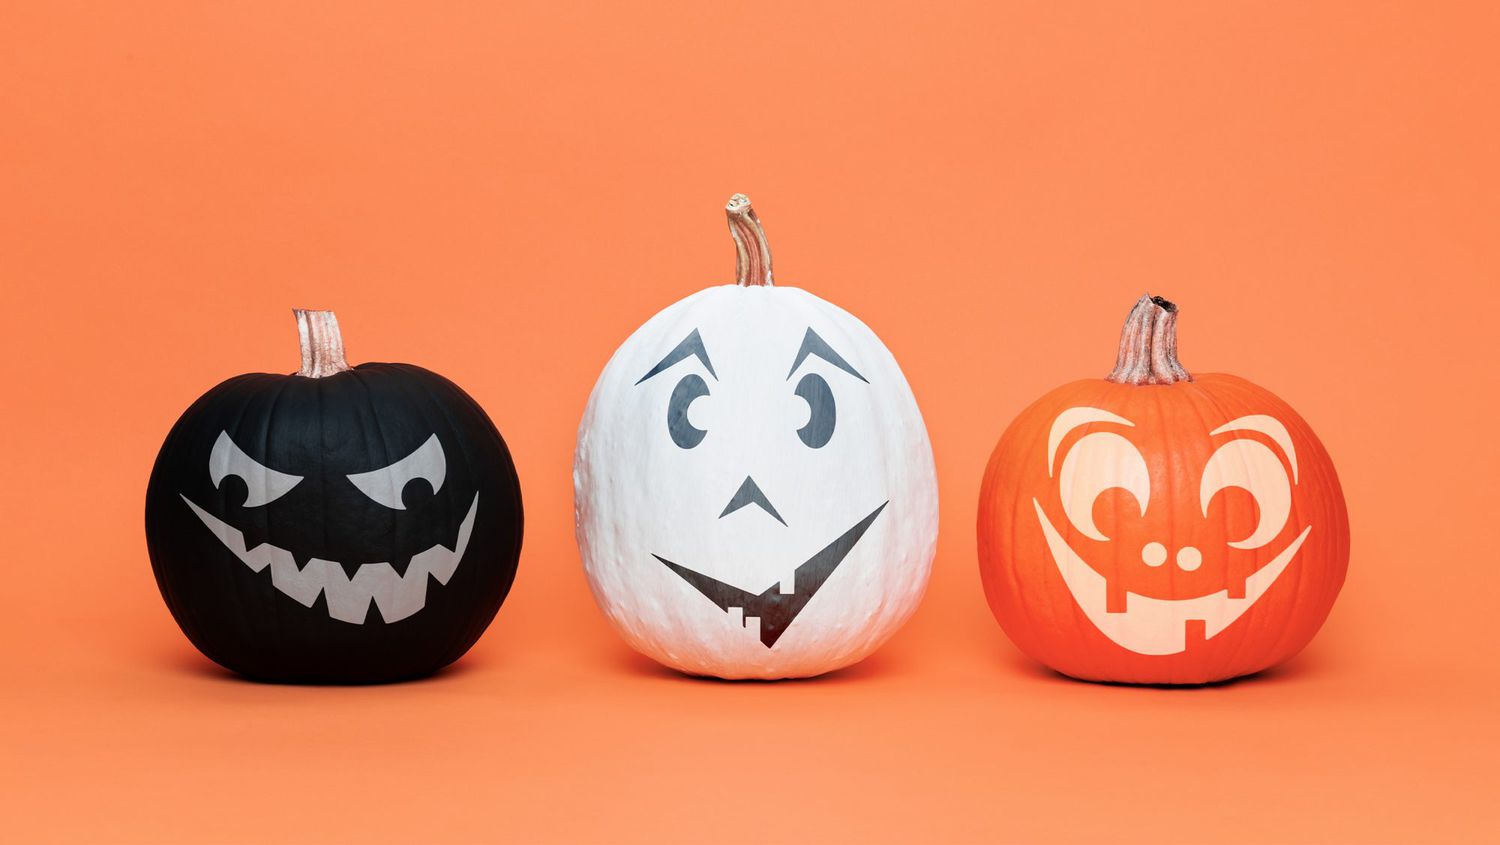 No carve pumpkin ideas - three decorated painted pumpkins